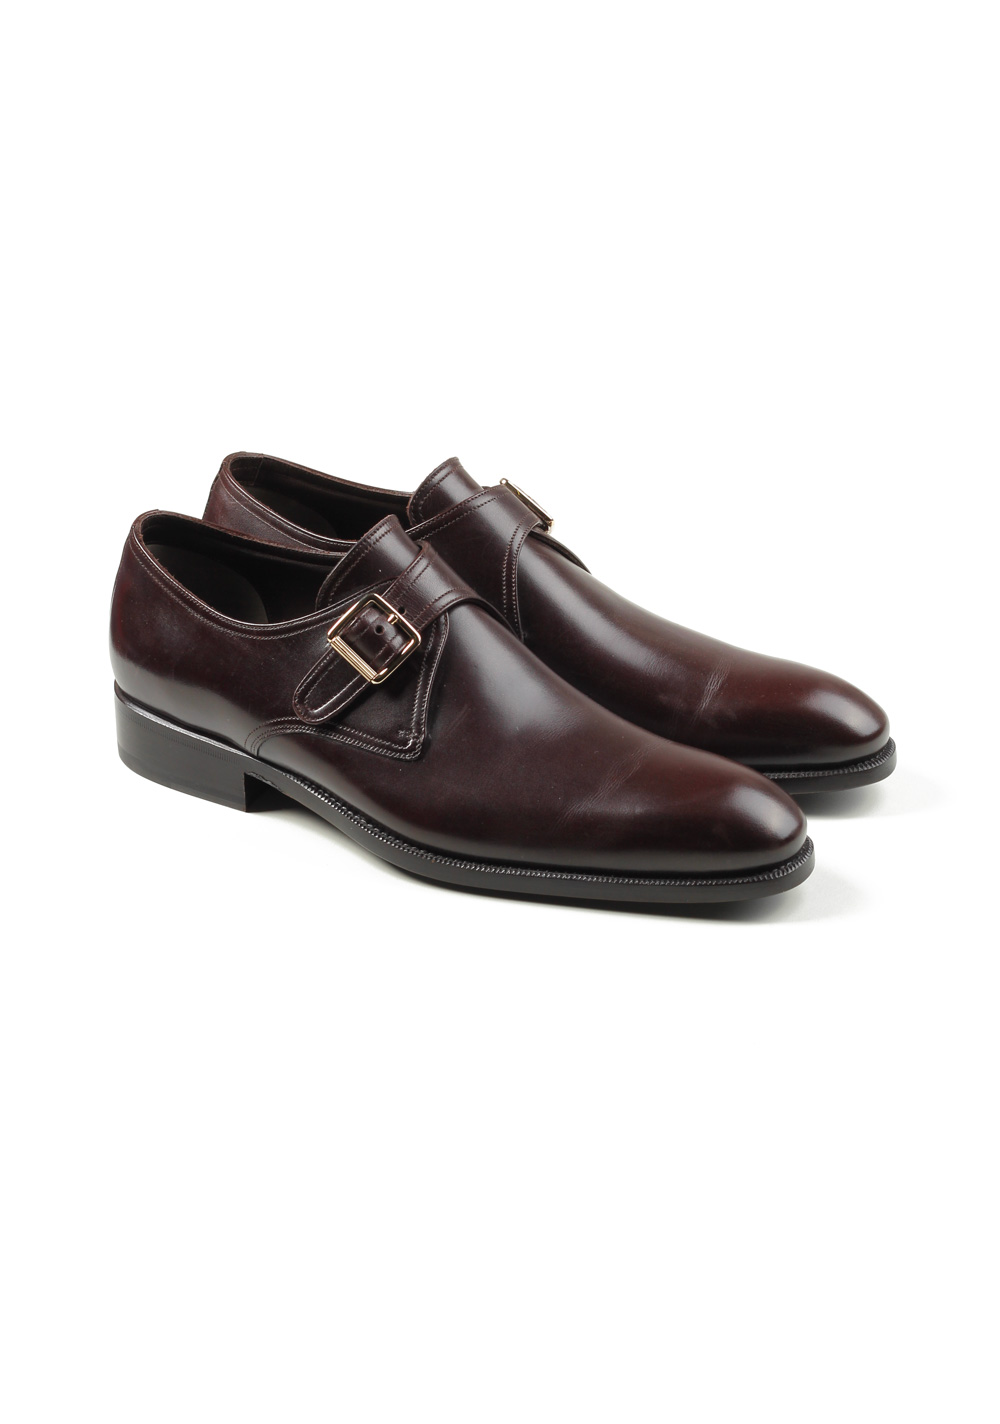 TOM FORD Brown Monk Strap Shoes Size 8T Uk / 9T U.S. | Costume Limité